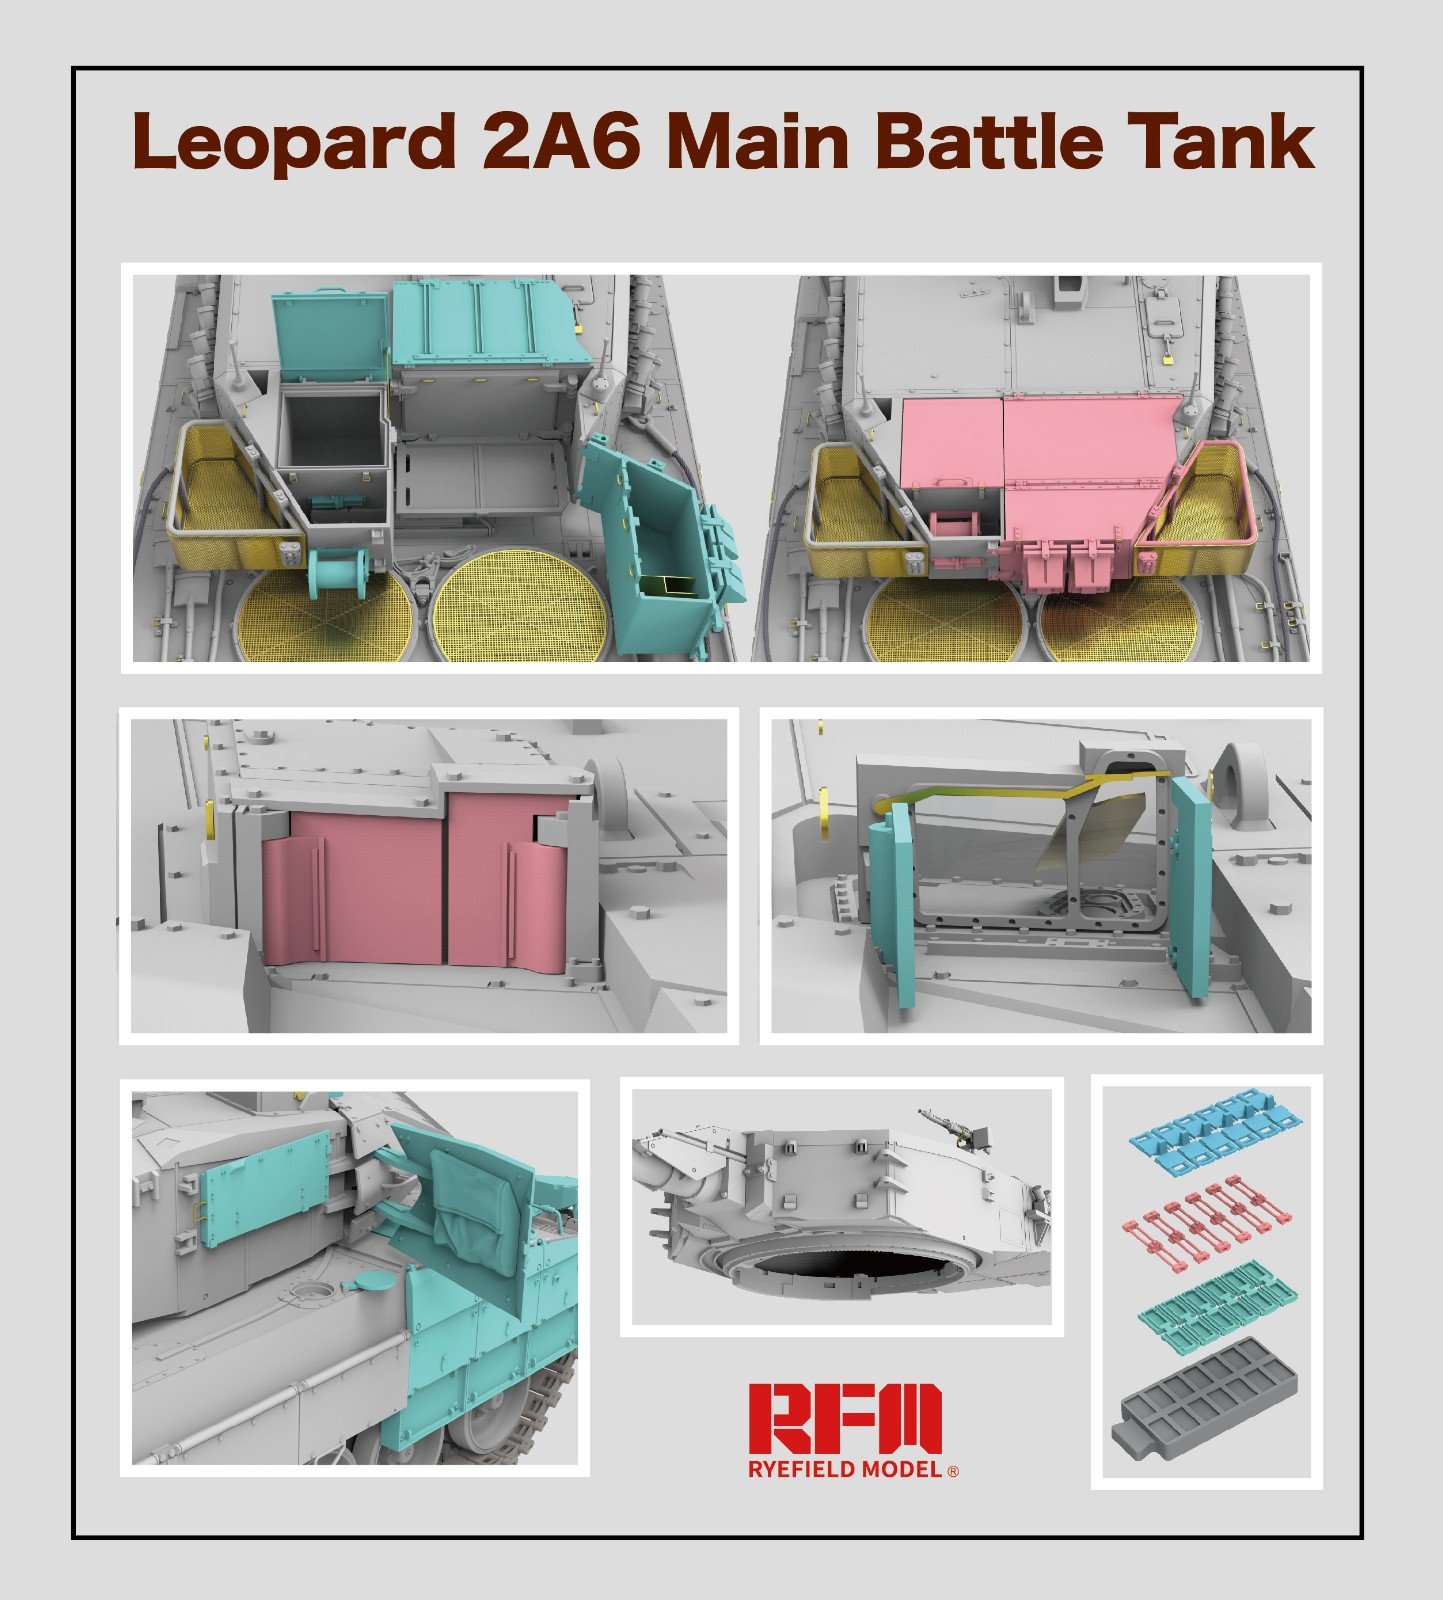 1/35 Leopard 2A6 Main Battle Tank - Click Image to Close